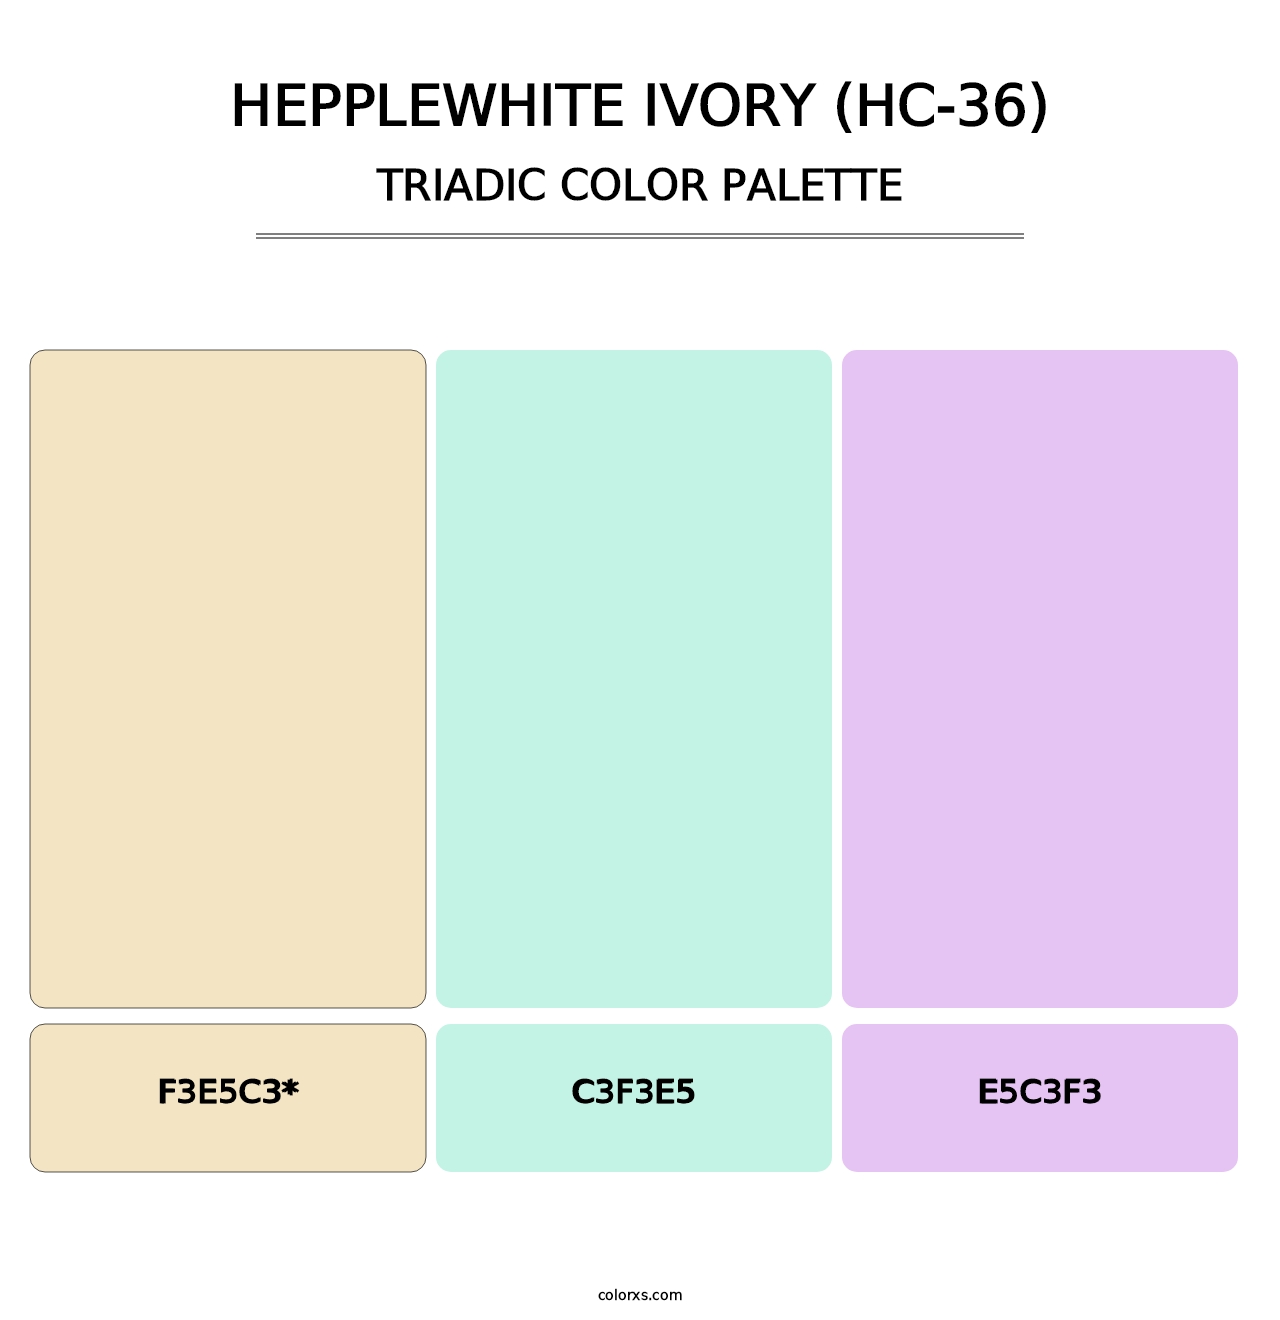 Hepplewhite Ivory (HC-36) - Triadic Color Palette